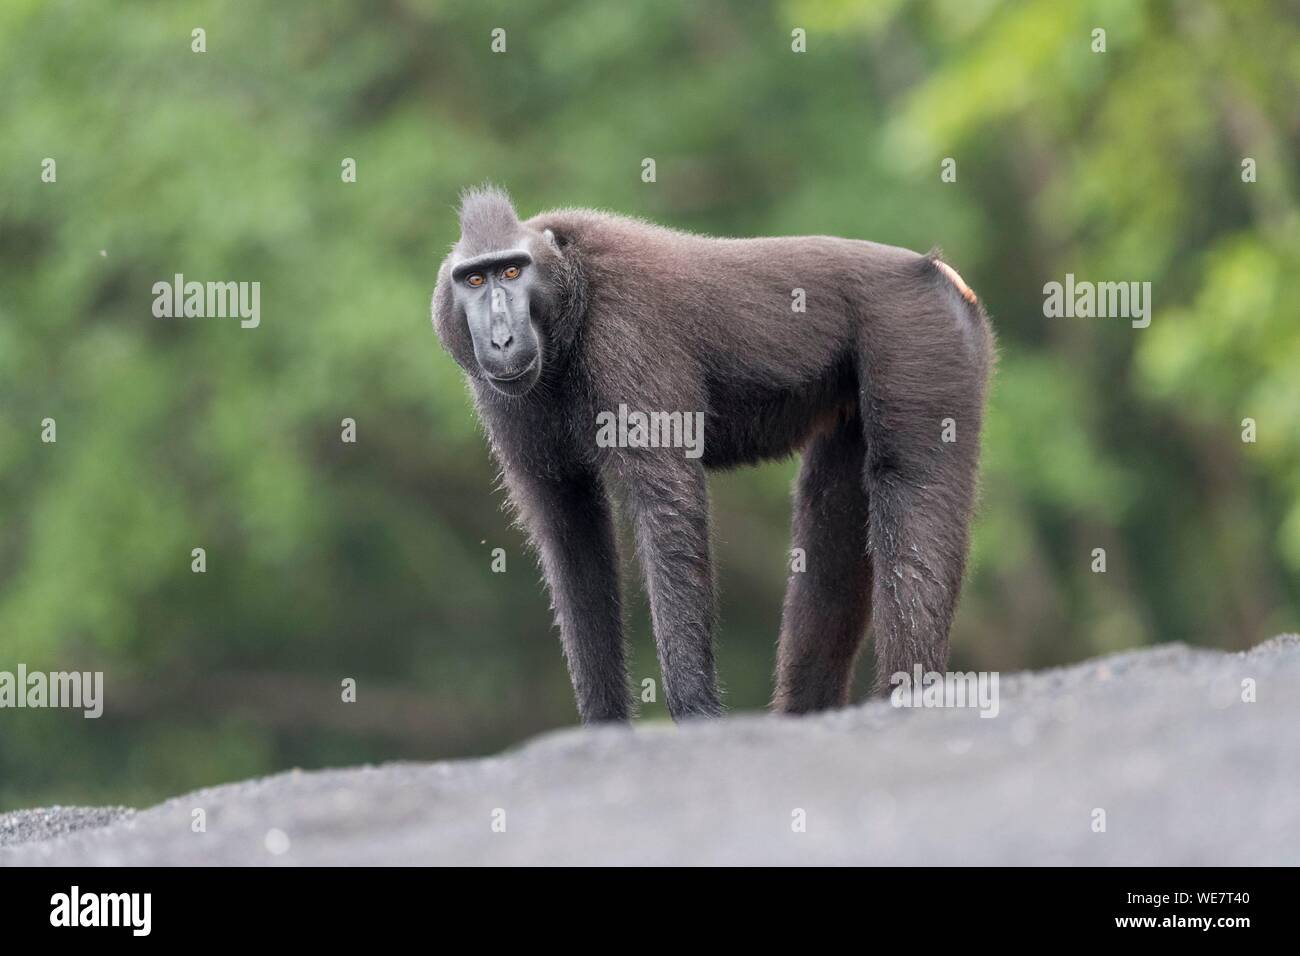 Indonesia, Celebes, Sulawesi, Tangkoko National Park, Celebes crestata o macaco crestato macaco nero, Sulawesi crested macaco o il black ape (Macaca nigra) Foto Stock